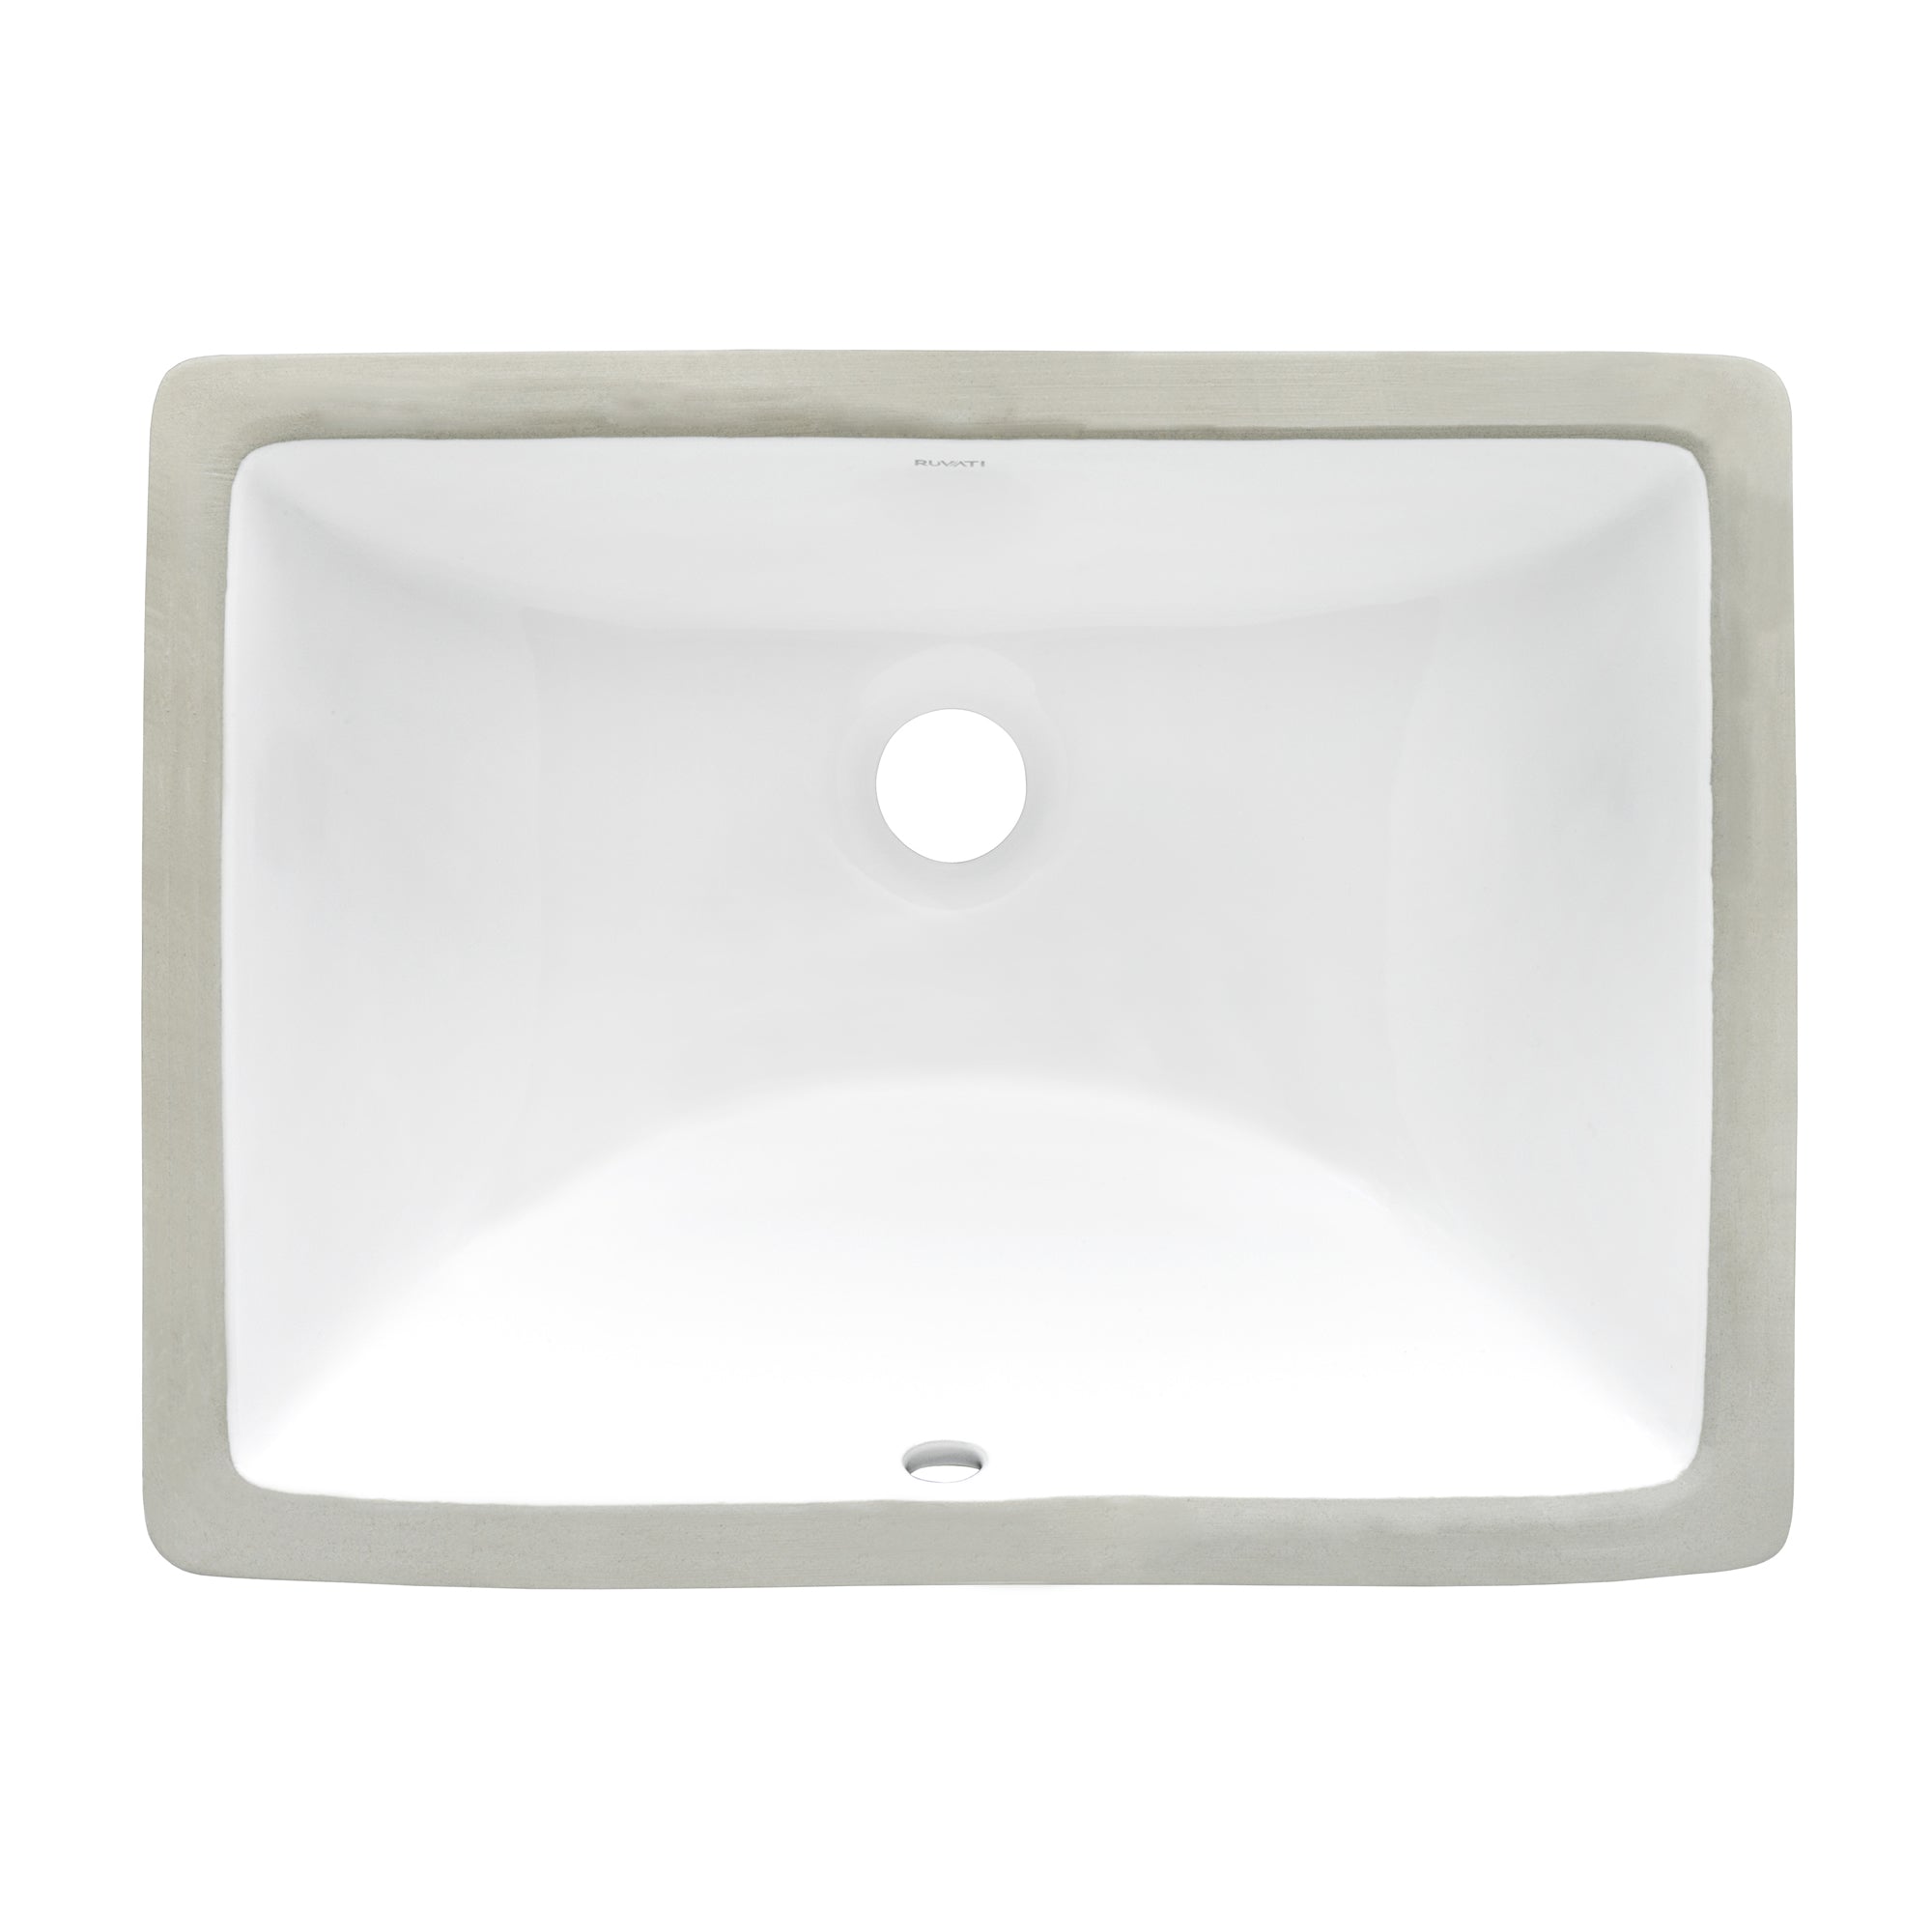 20 x 15 inch Undermount Bathroom Sink White Rectangular Porcelain Ceramic with Overflow